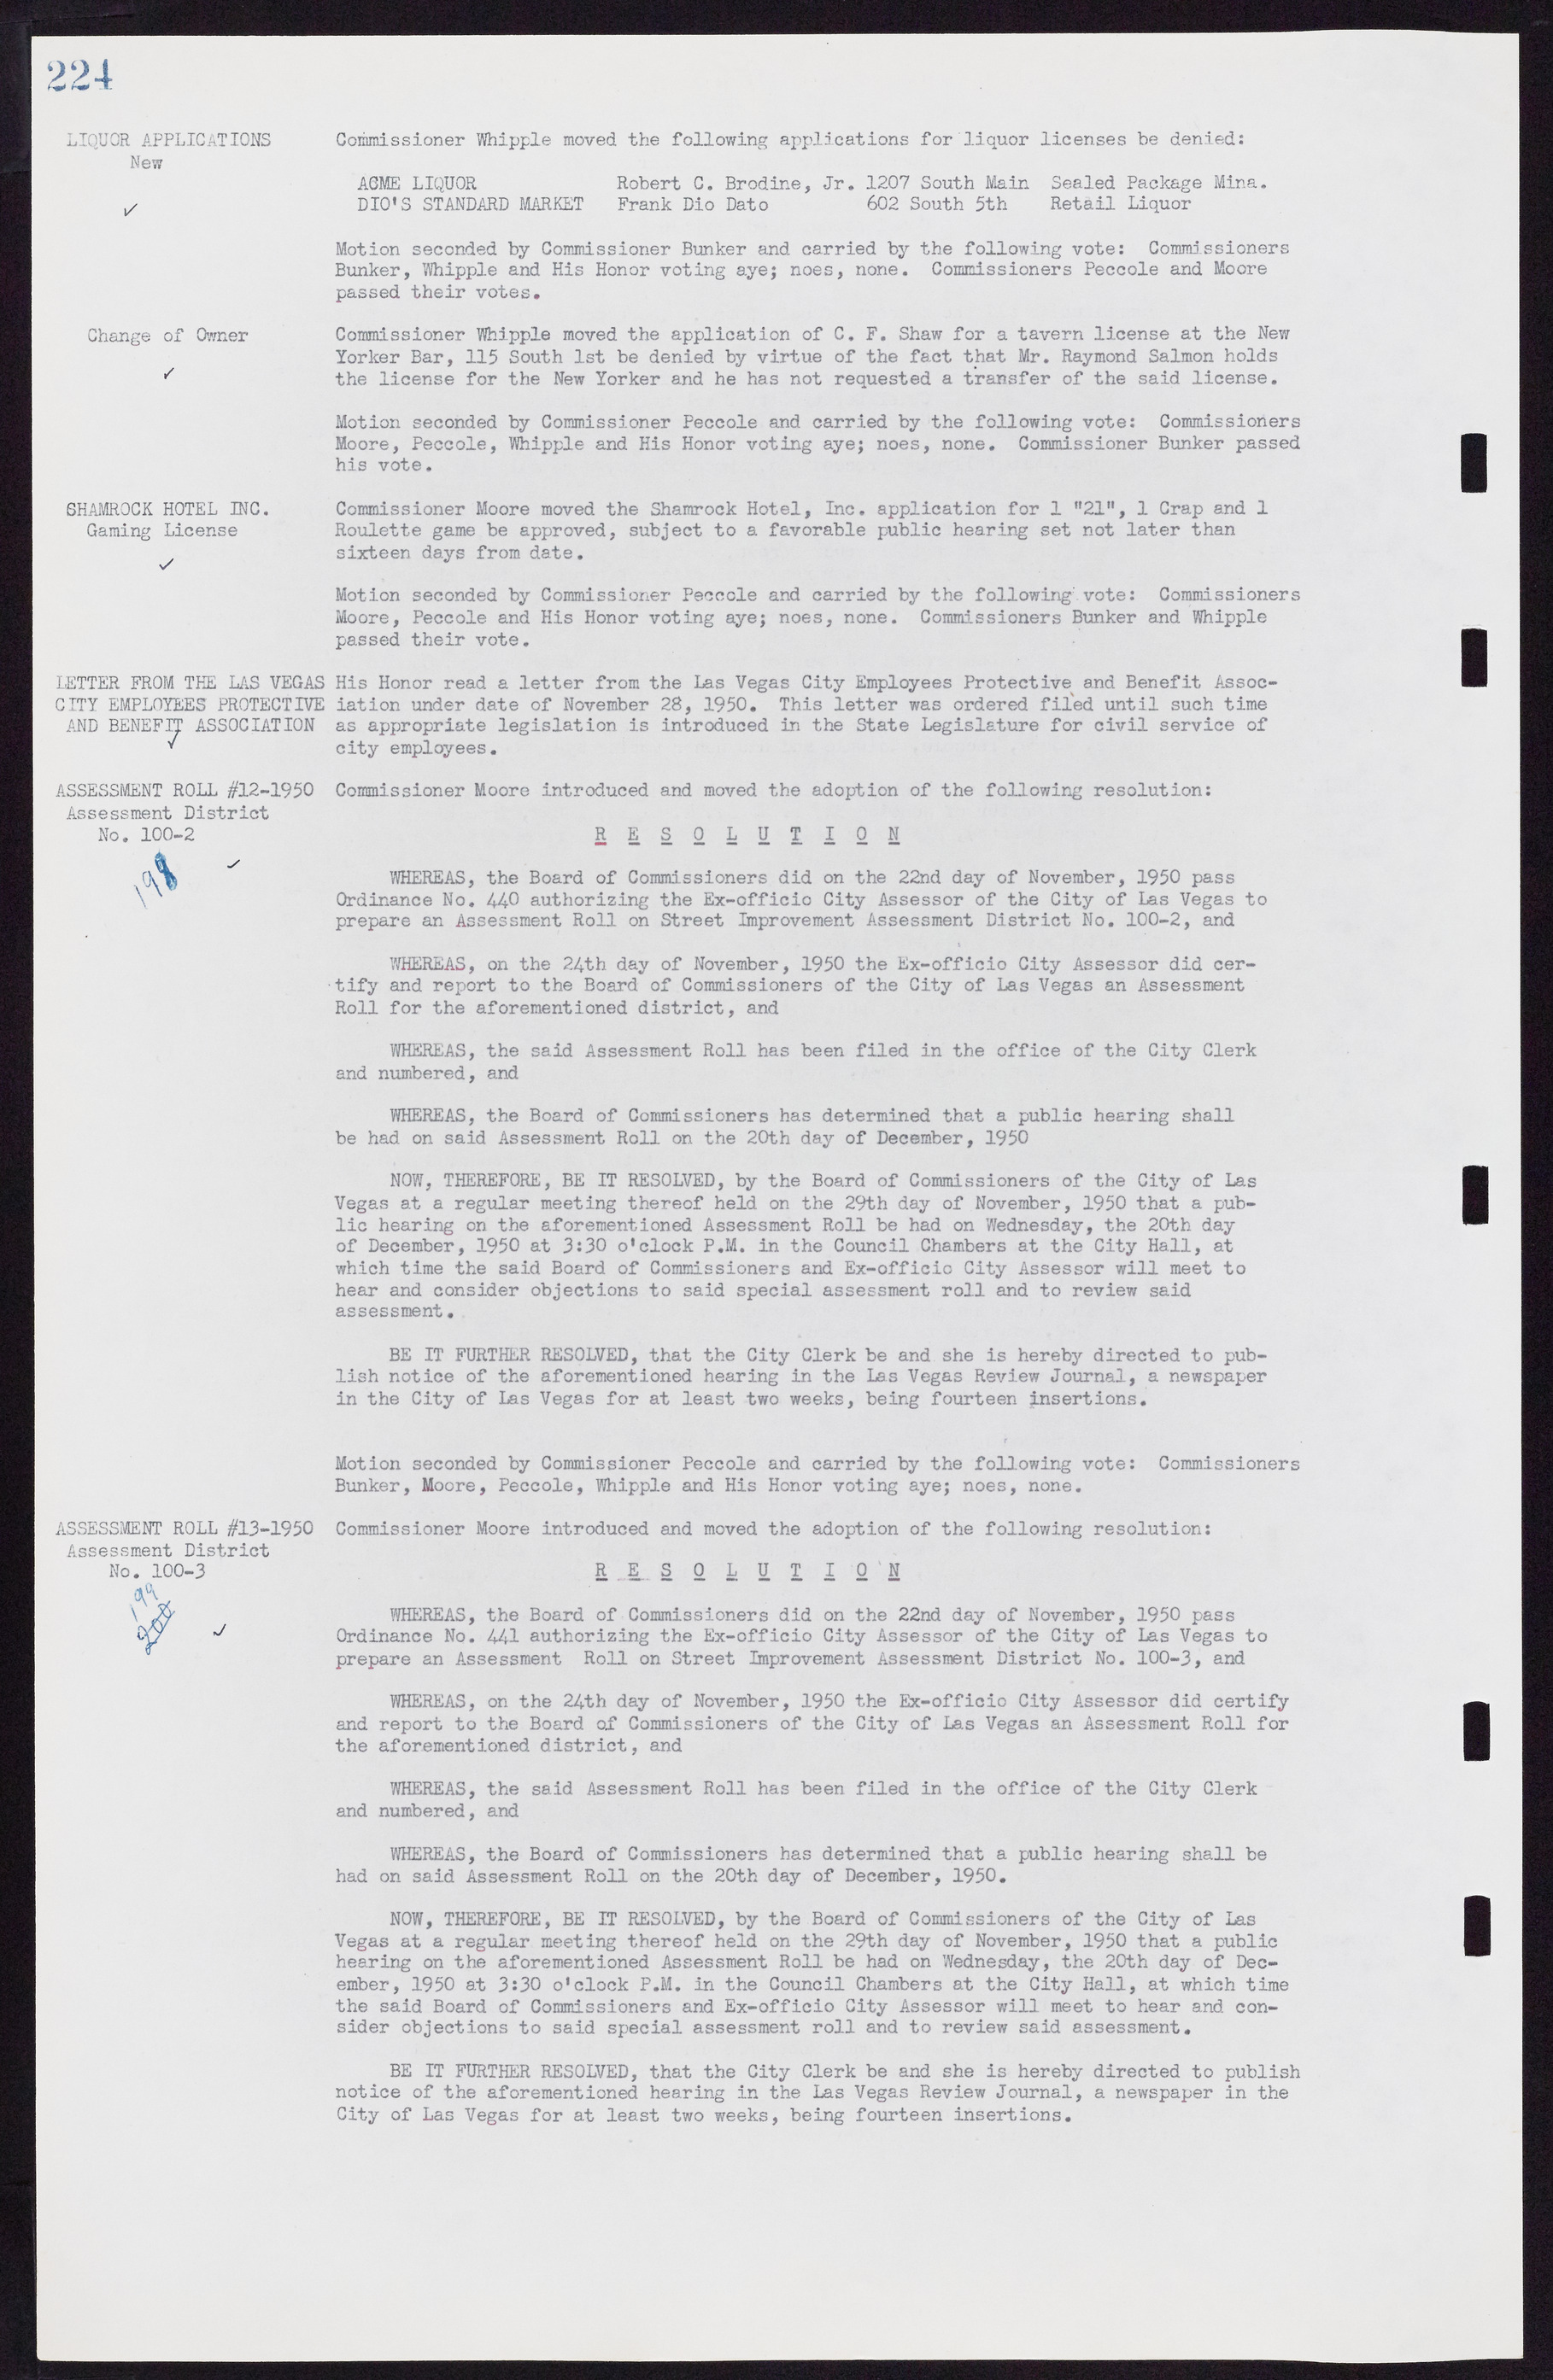 Las Vegas City Commission Minutes, November 7, 1949 to May 21, 1952, lvc000007-234